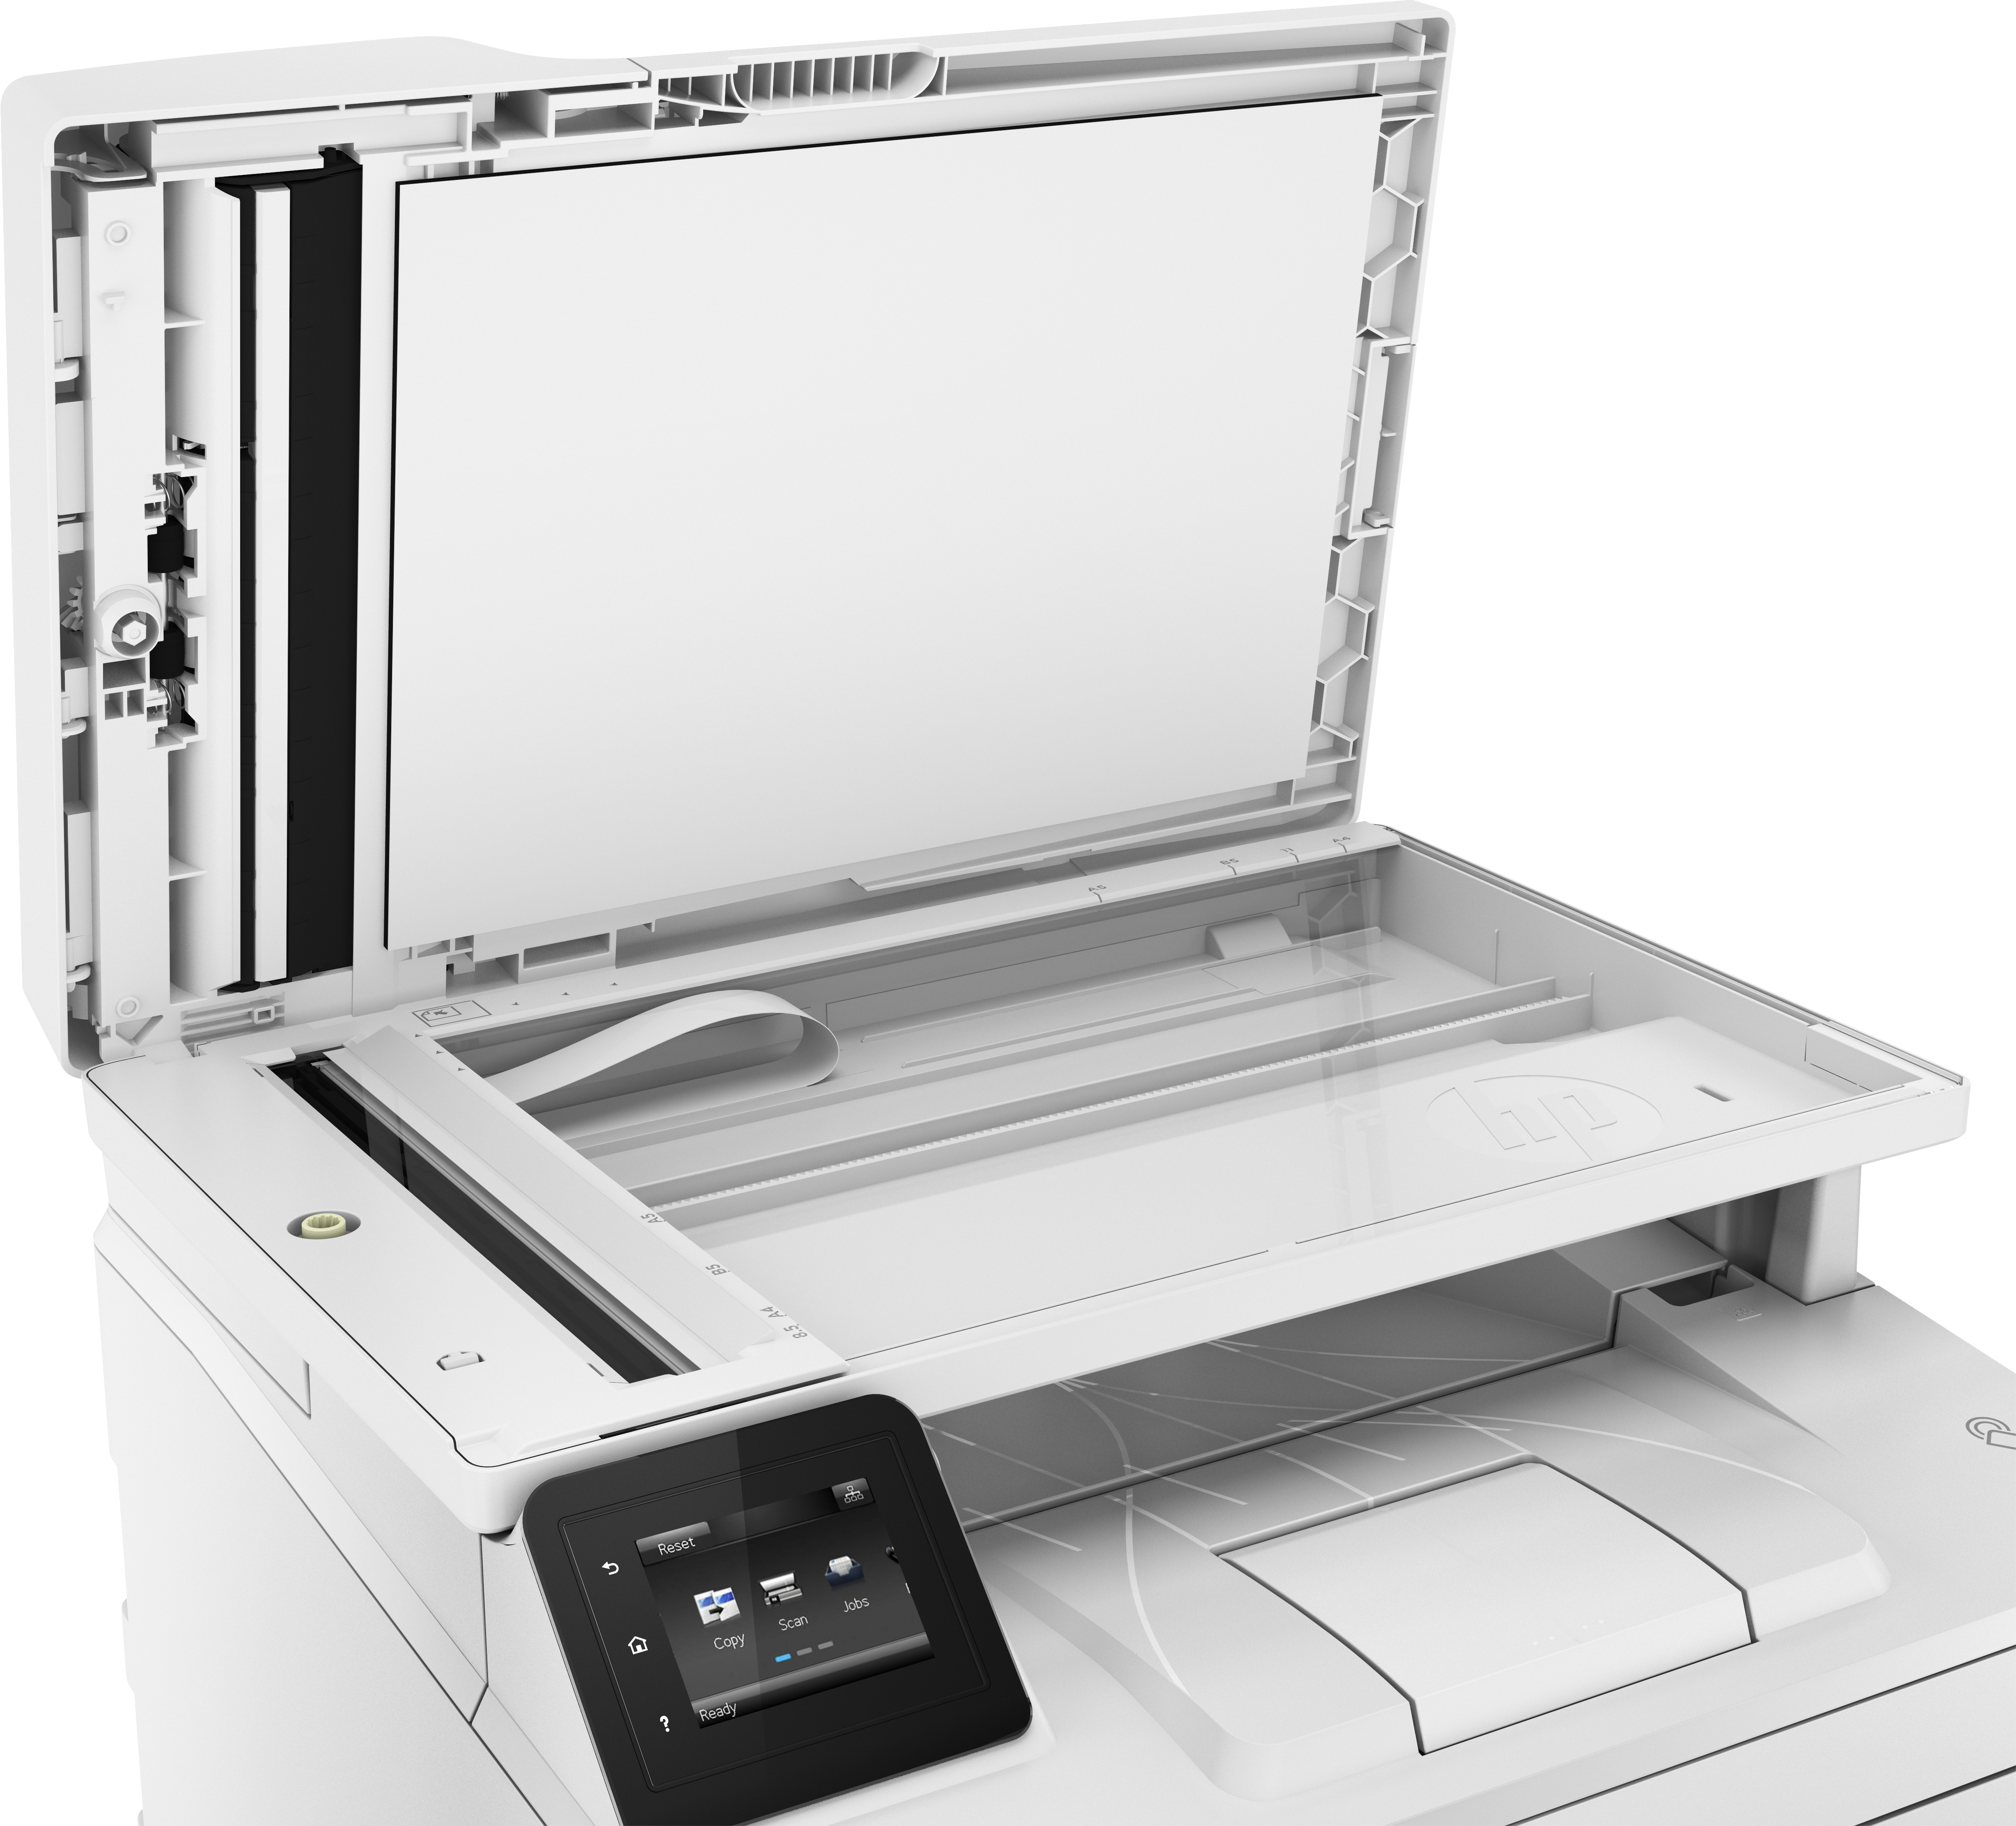 HP G3Q75A#B19  HP LaserJet Pro Impresora multifunción M227fdw